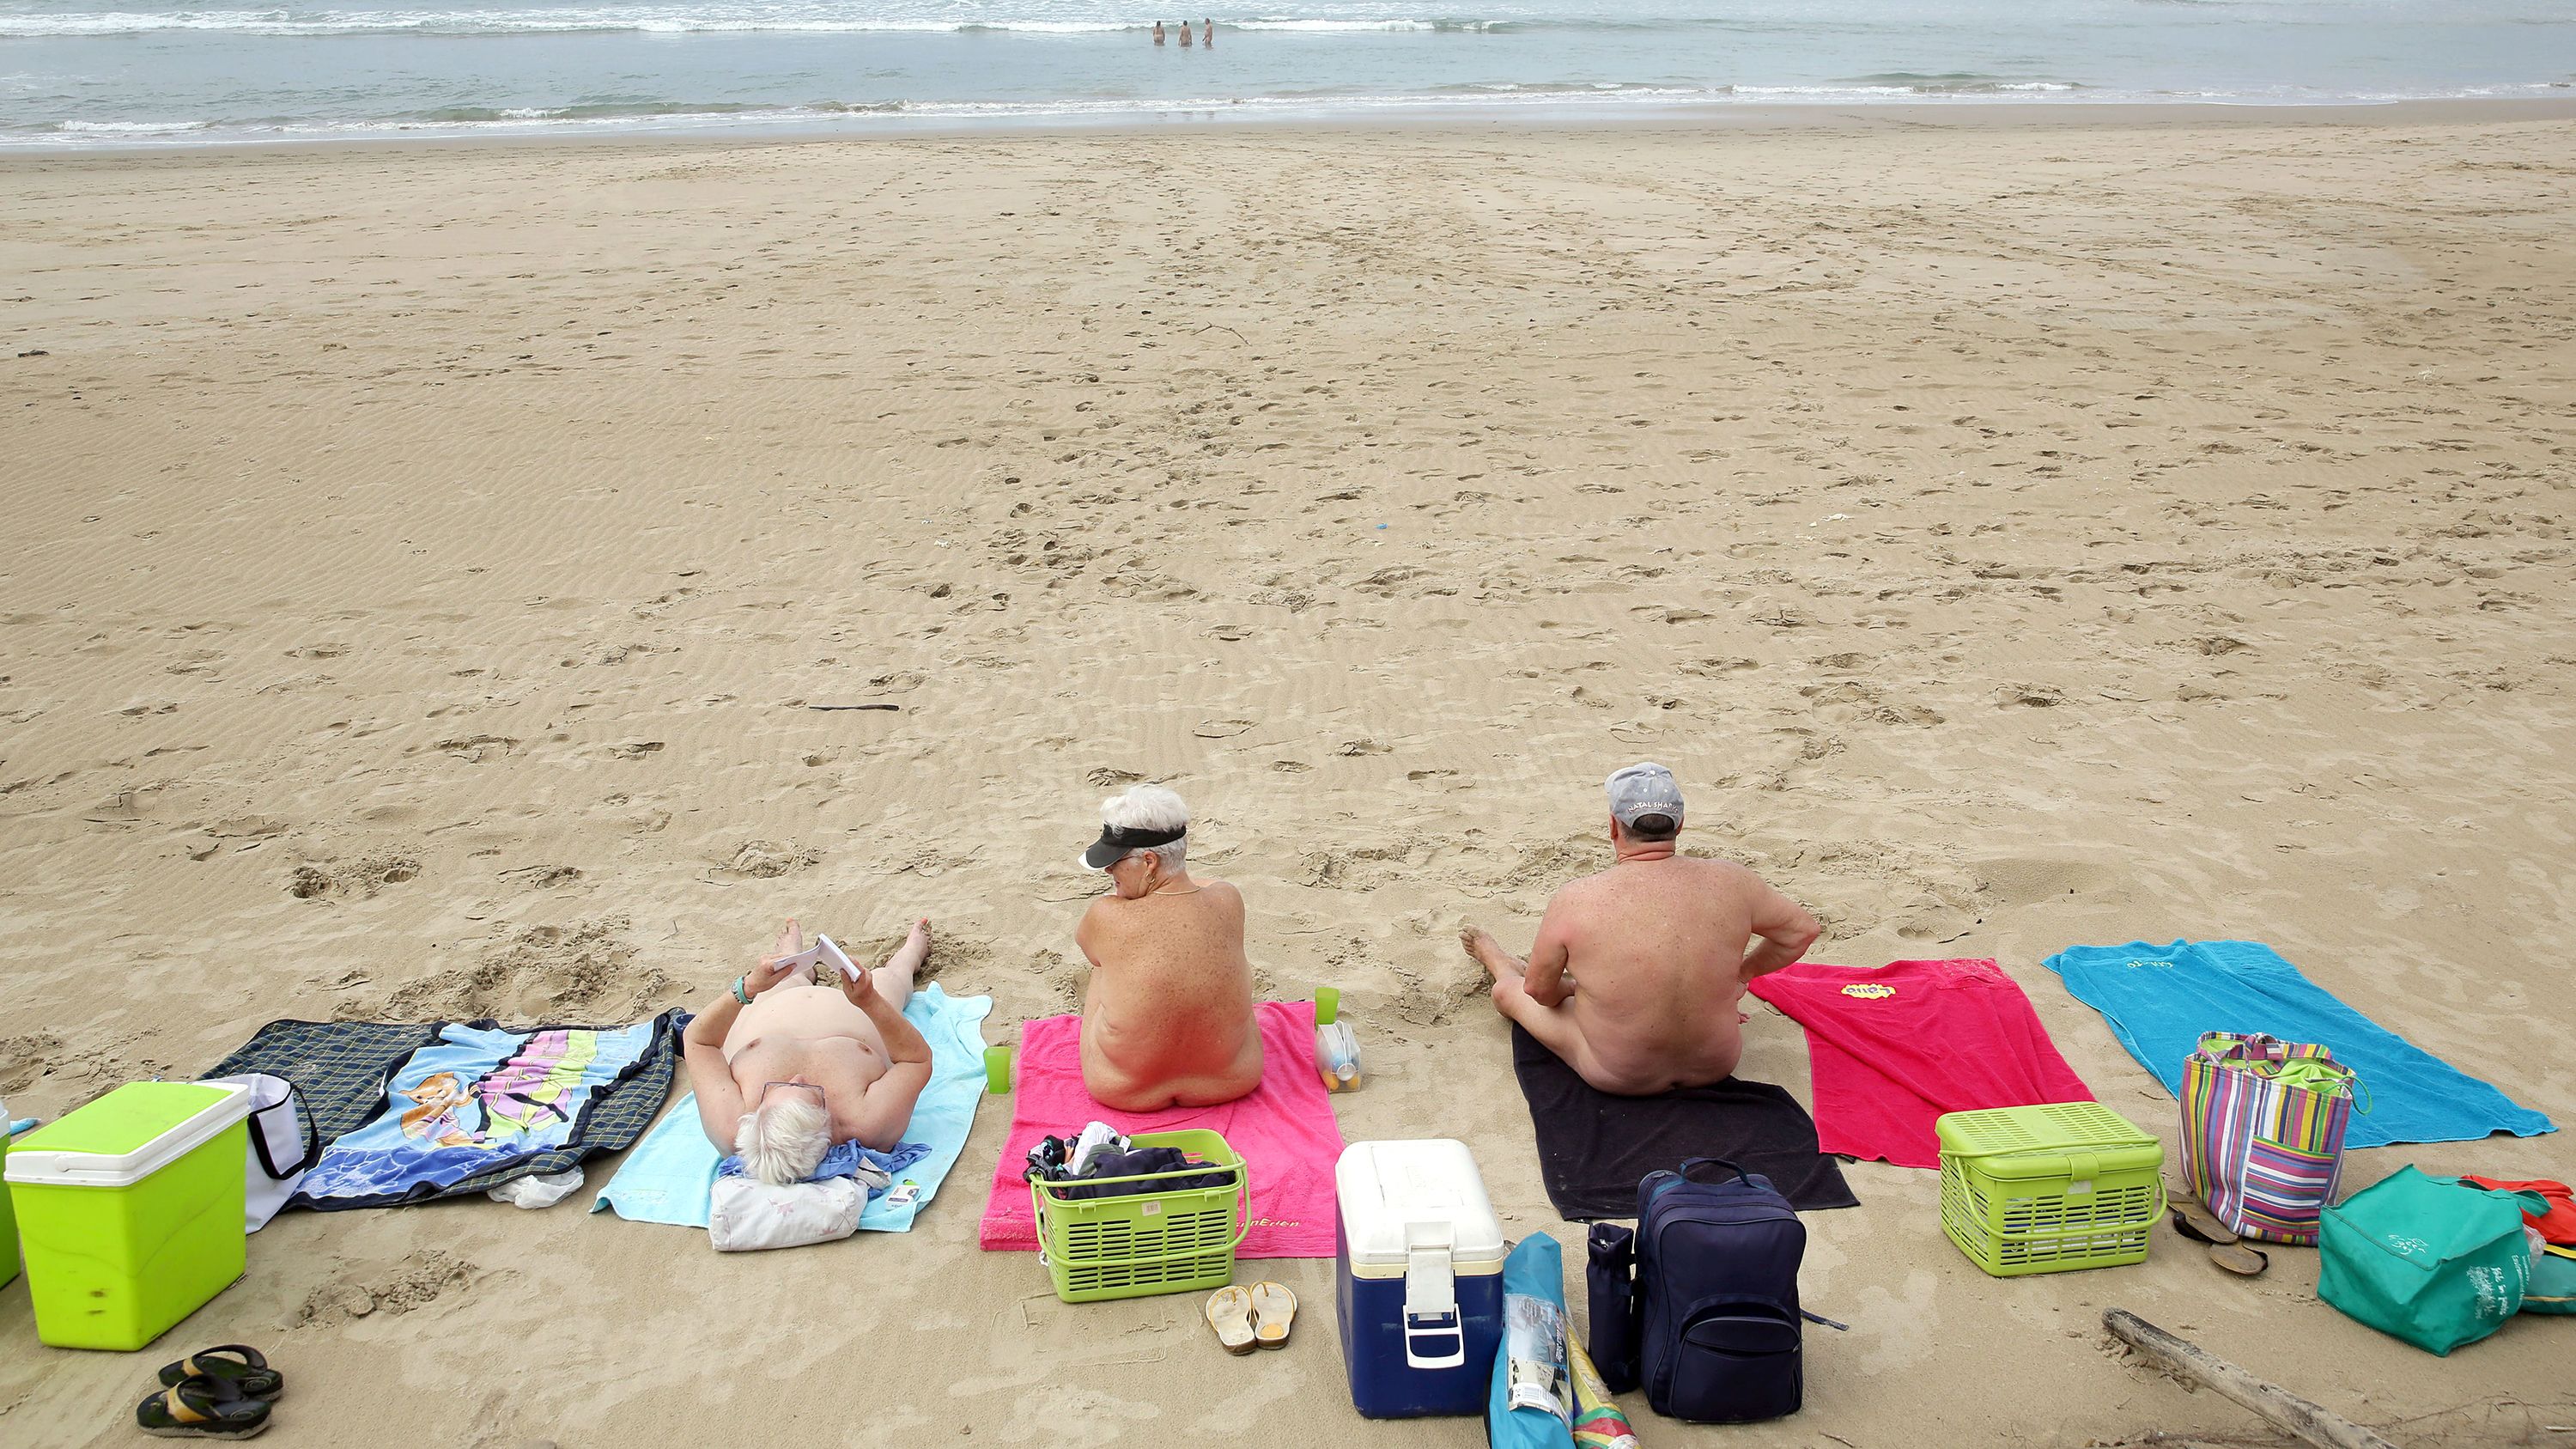 Top nude beaches around the globe (photos) | CNN